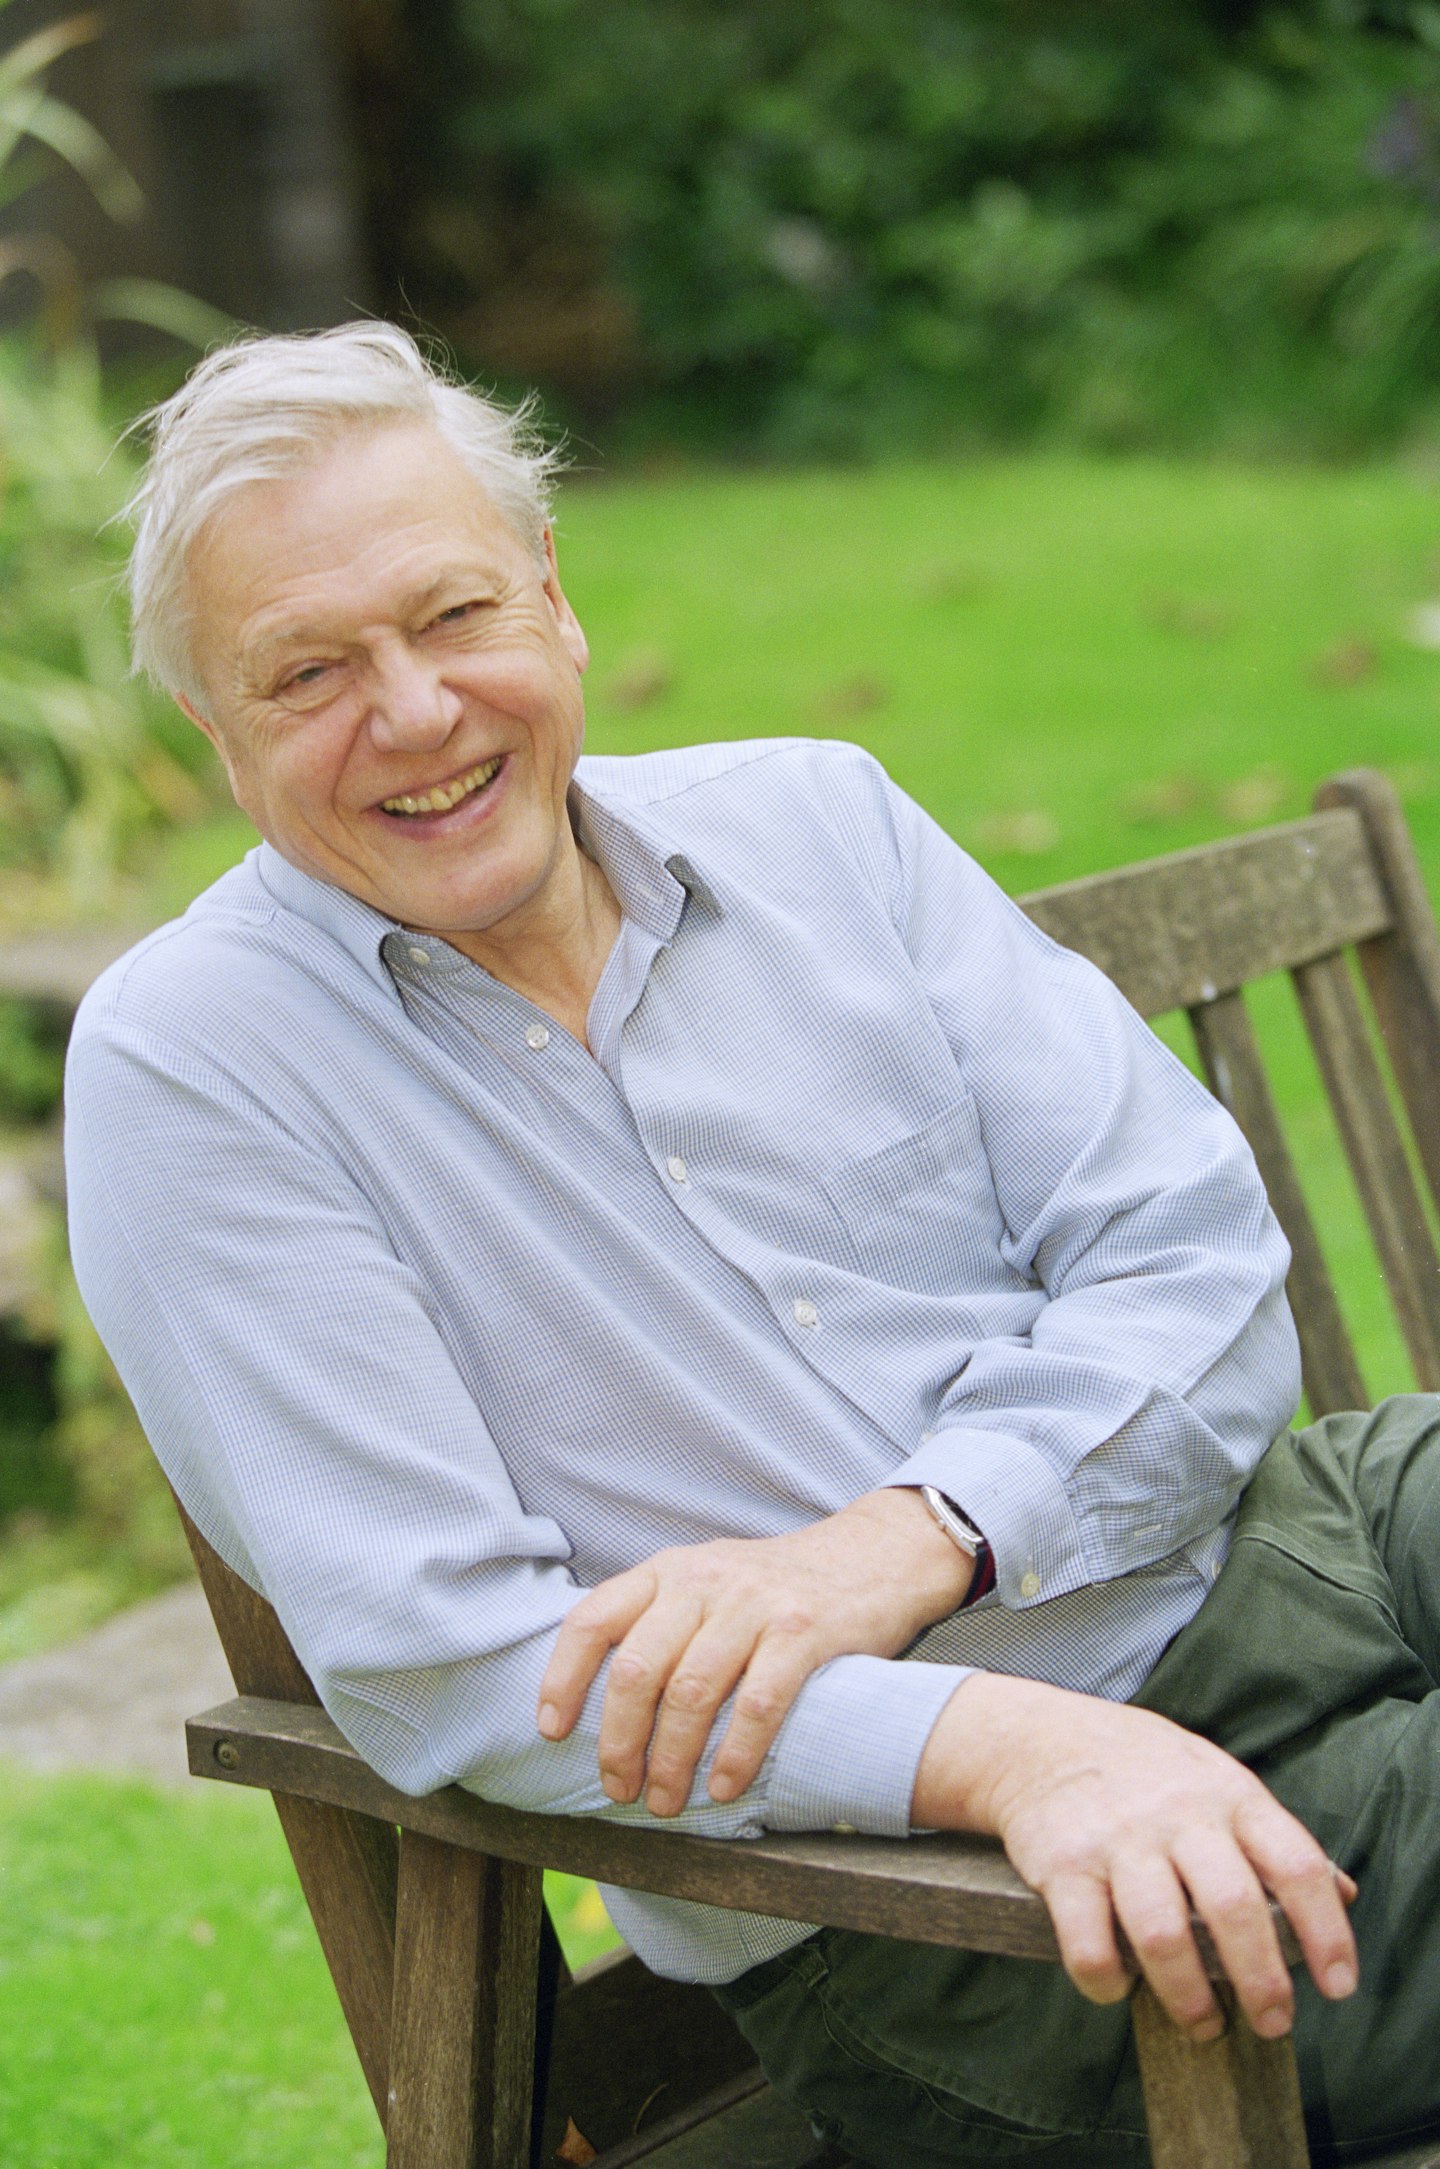 David Attenborough in 1998